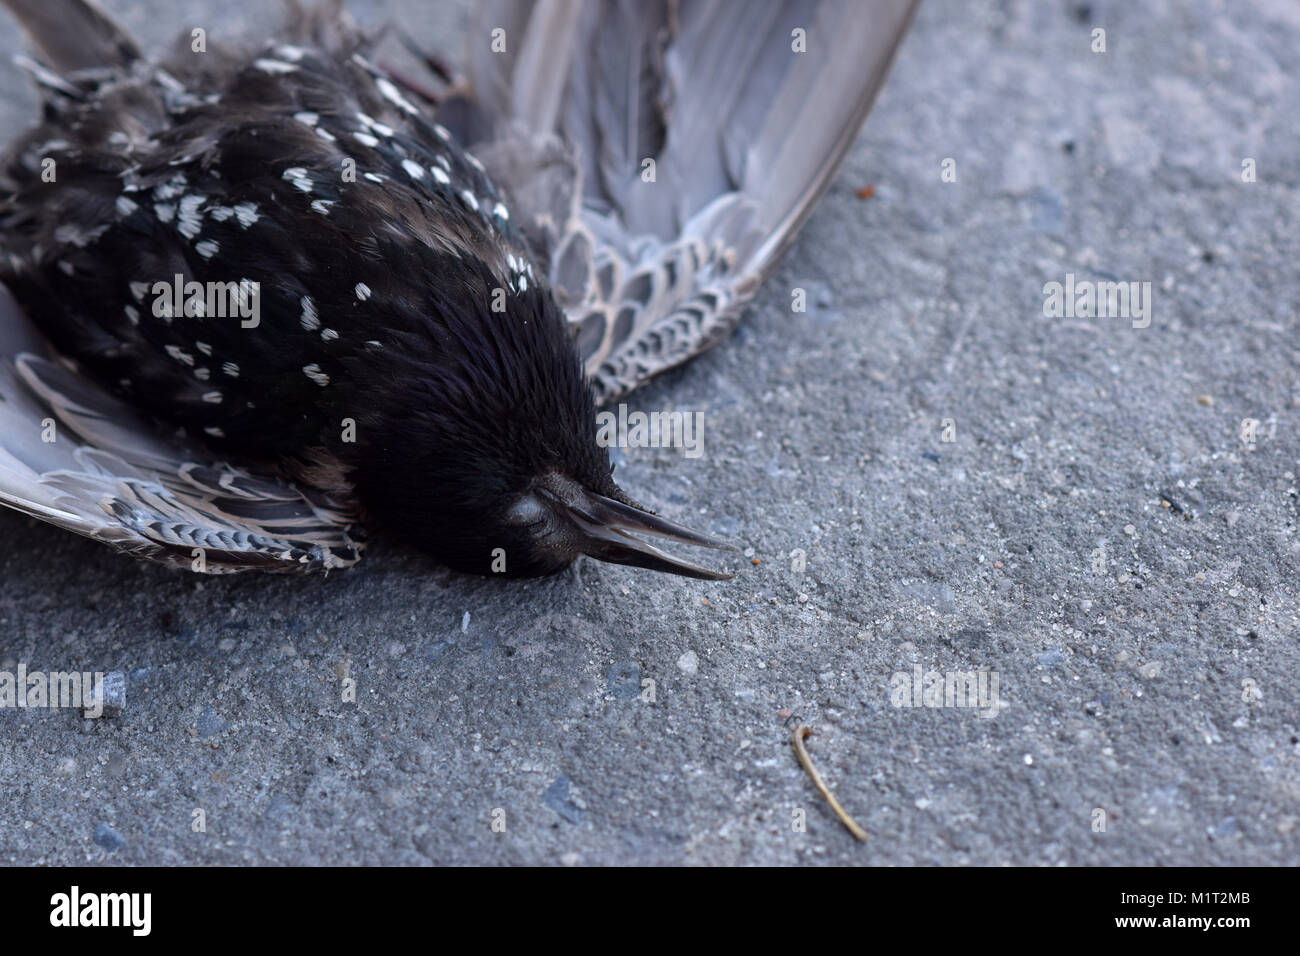 Dead black bird spread-eagle on the grey sidewalk. Stock Photo